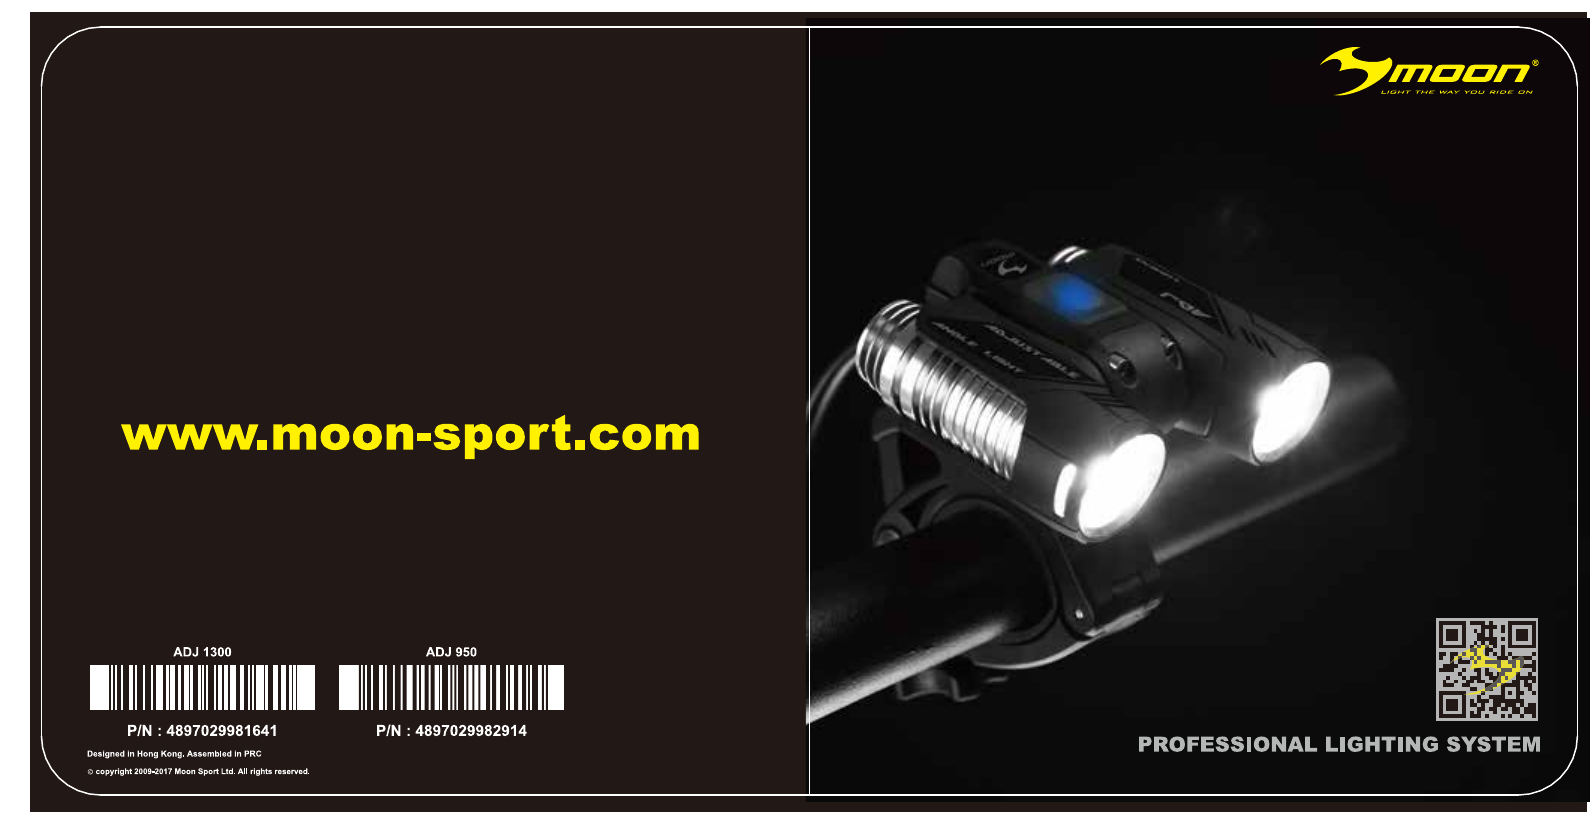 BRAND NEW MOON ADJ 950 LUMEN BIKE LIGHT RECHARGEABLE LED CYCLING